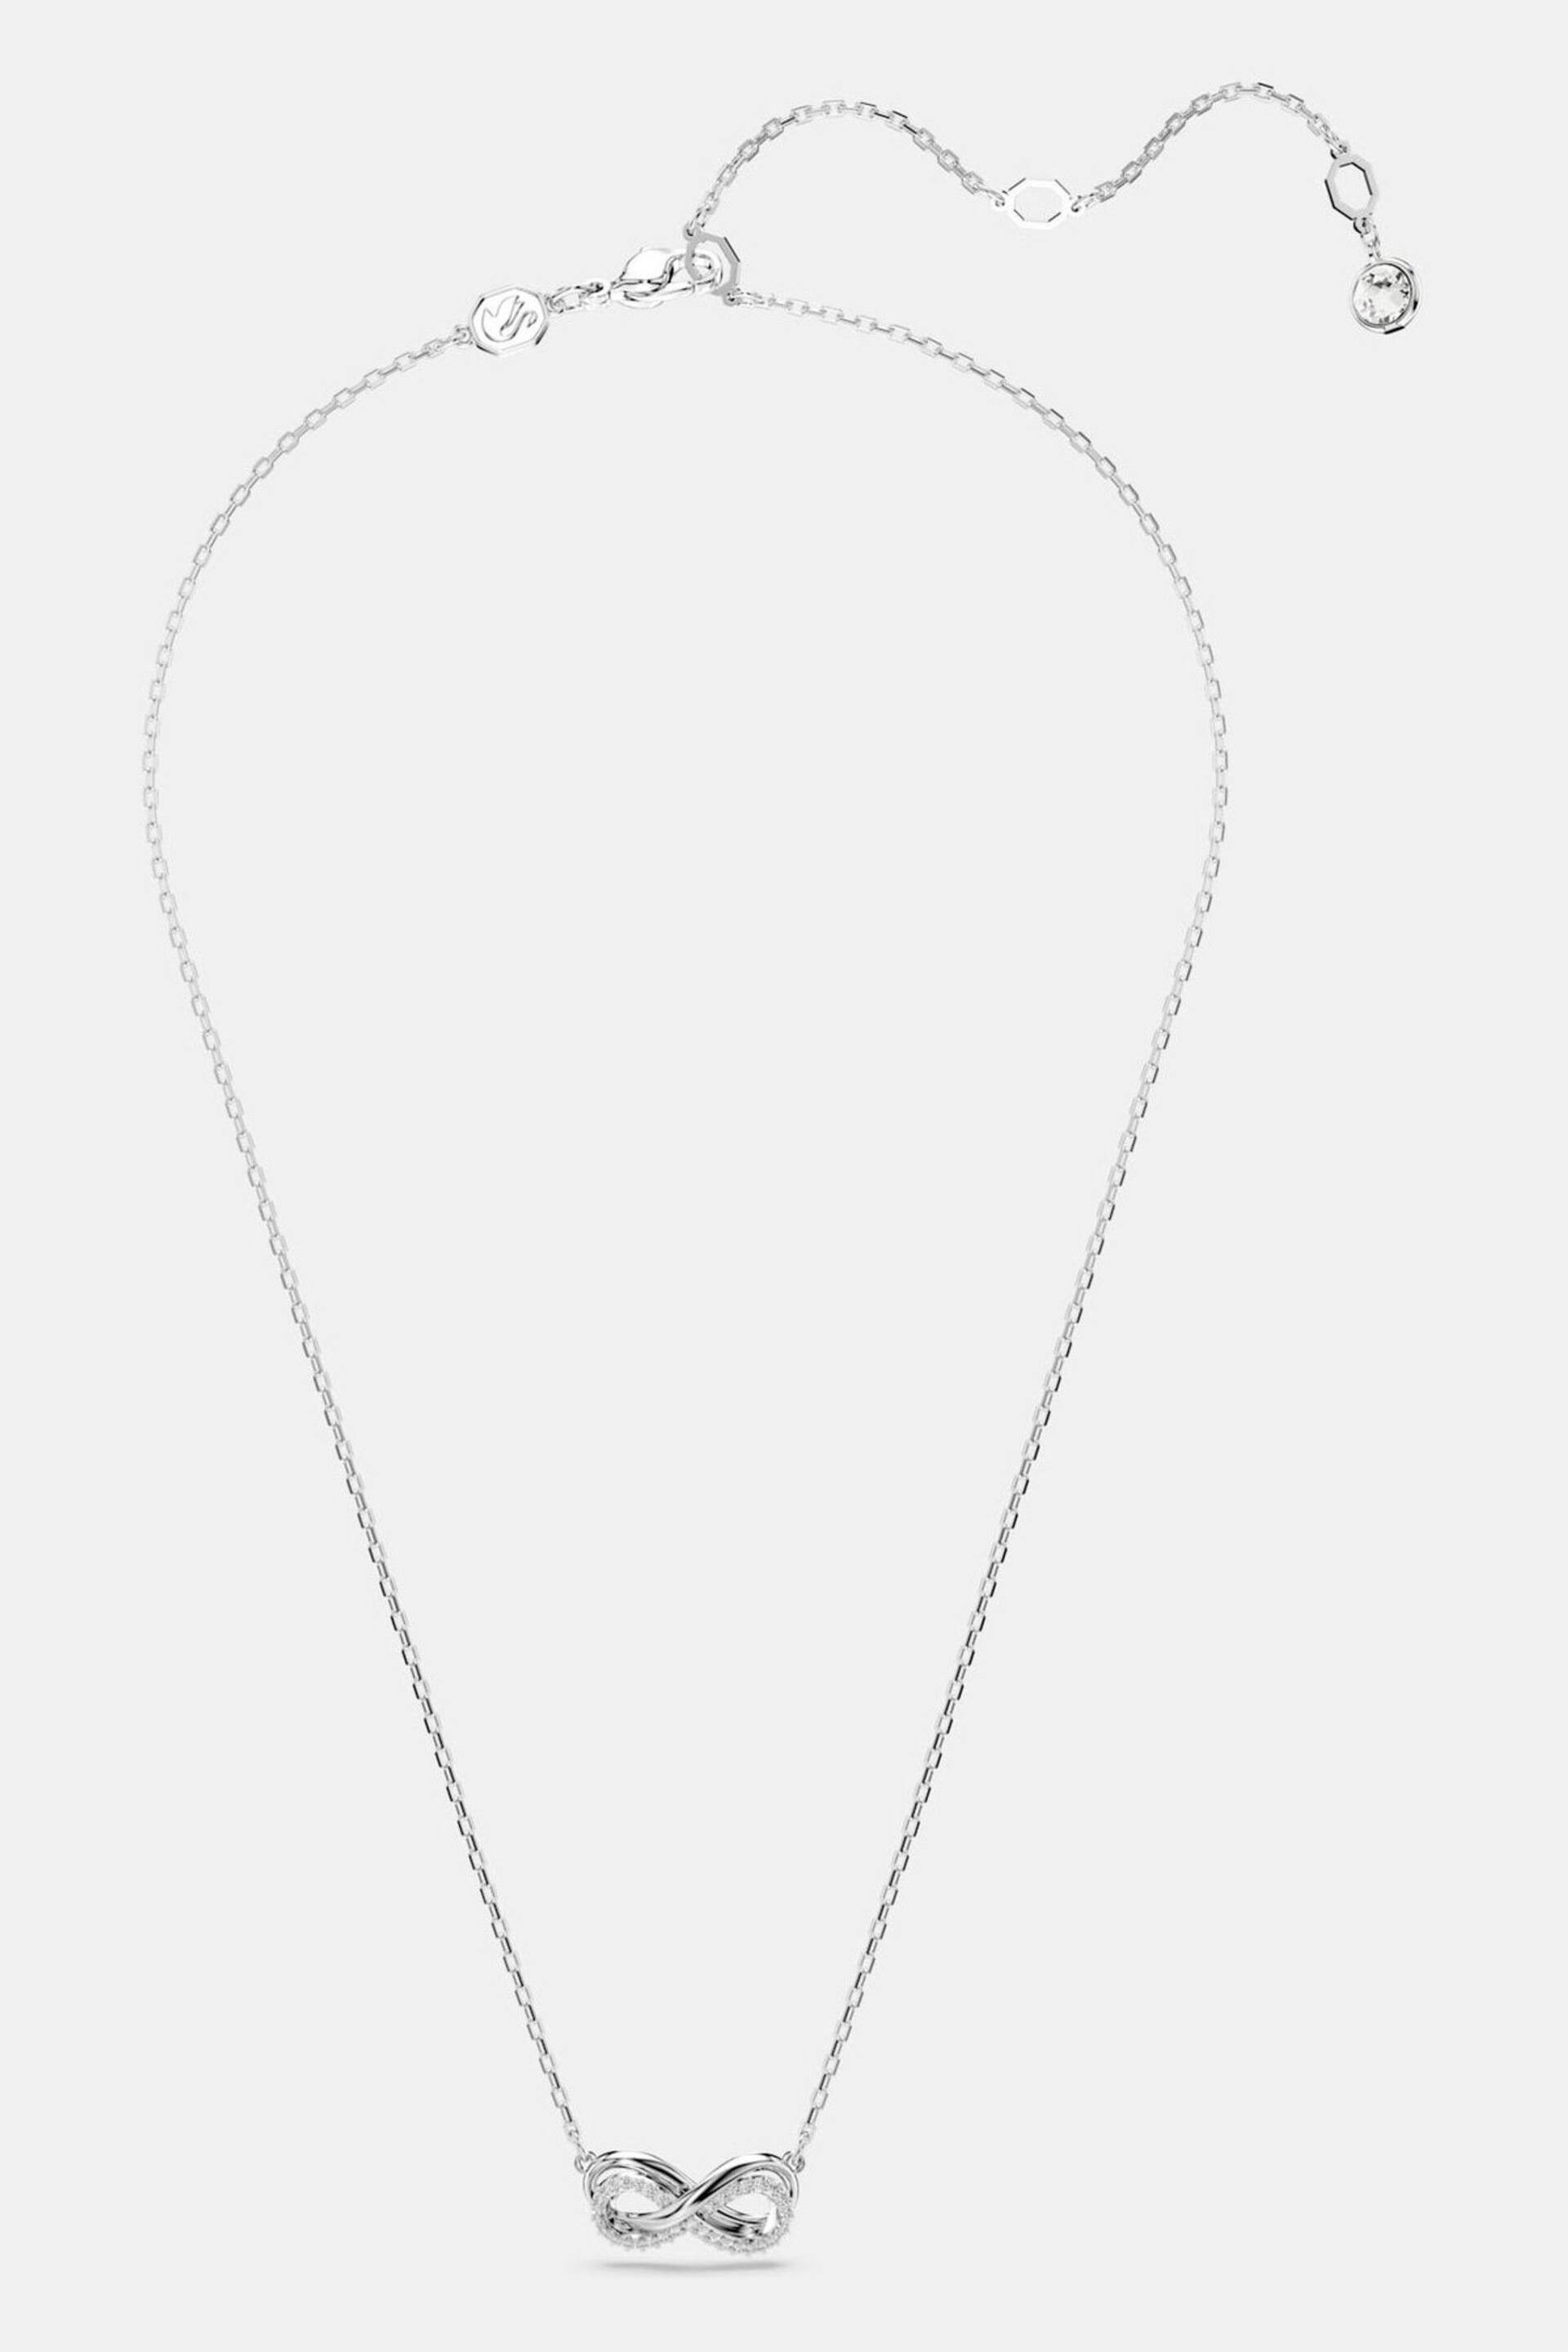 Swarovski Silver Swarovski Infinity Crystal Pendant Necklace - Image 2 of 5